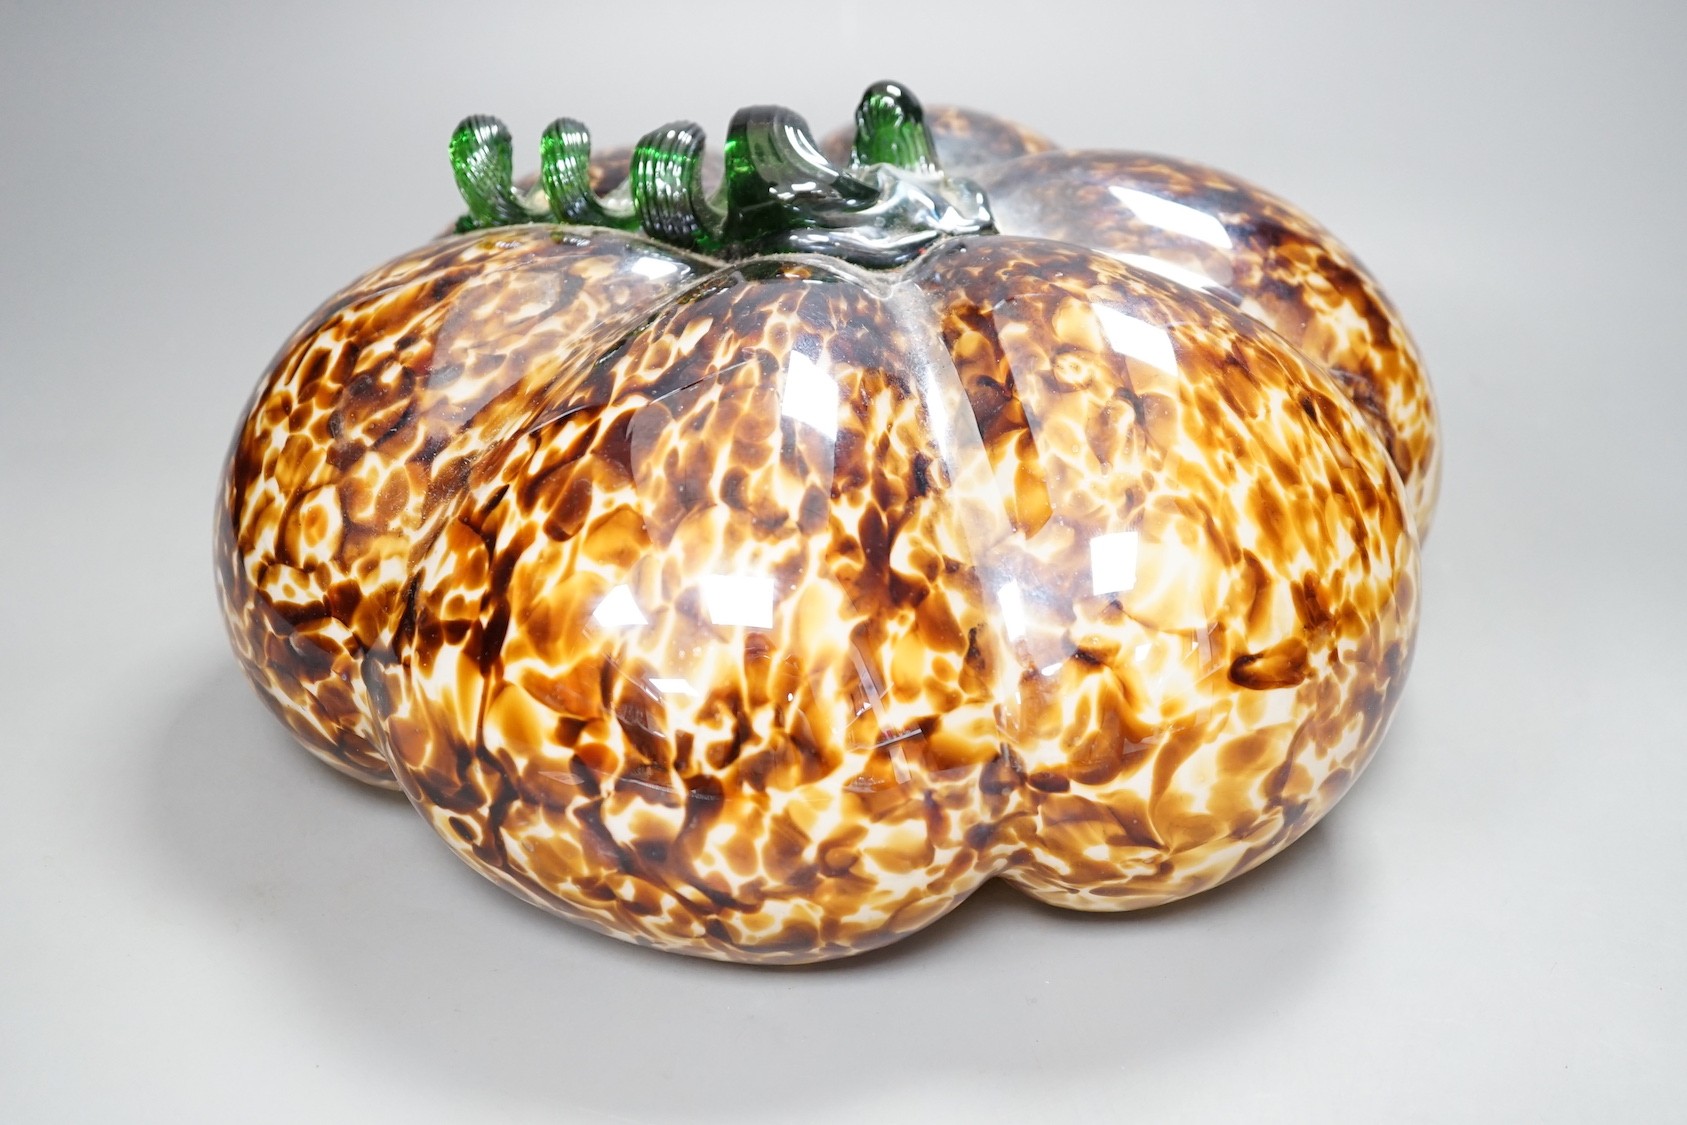 Studio glass figure of a pumpkin - 29cm diameter